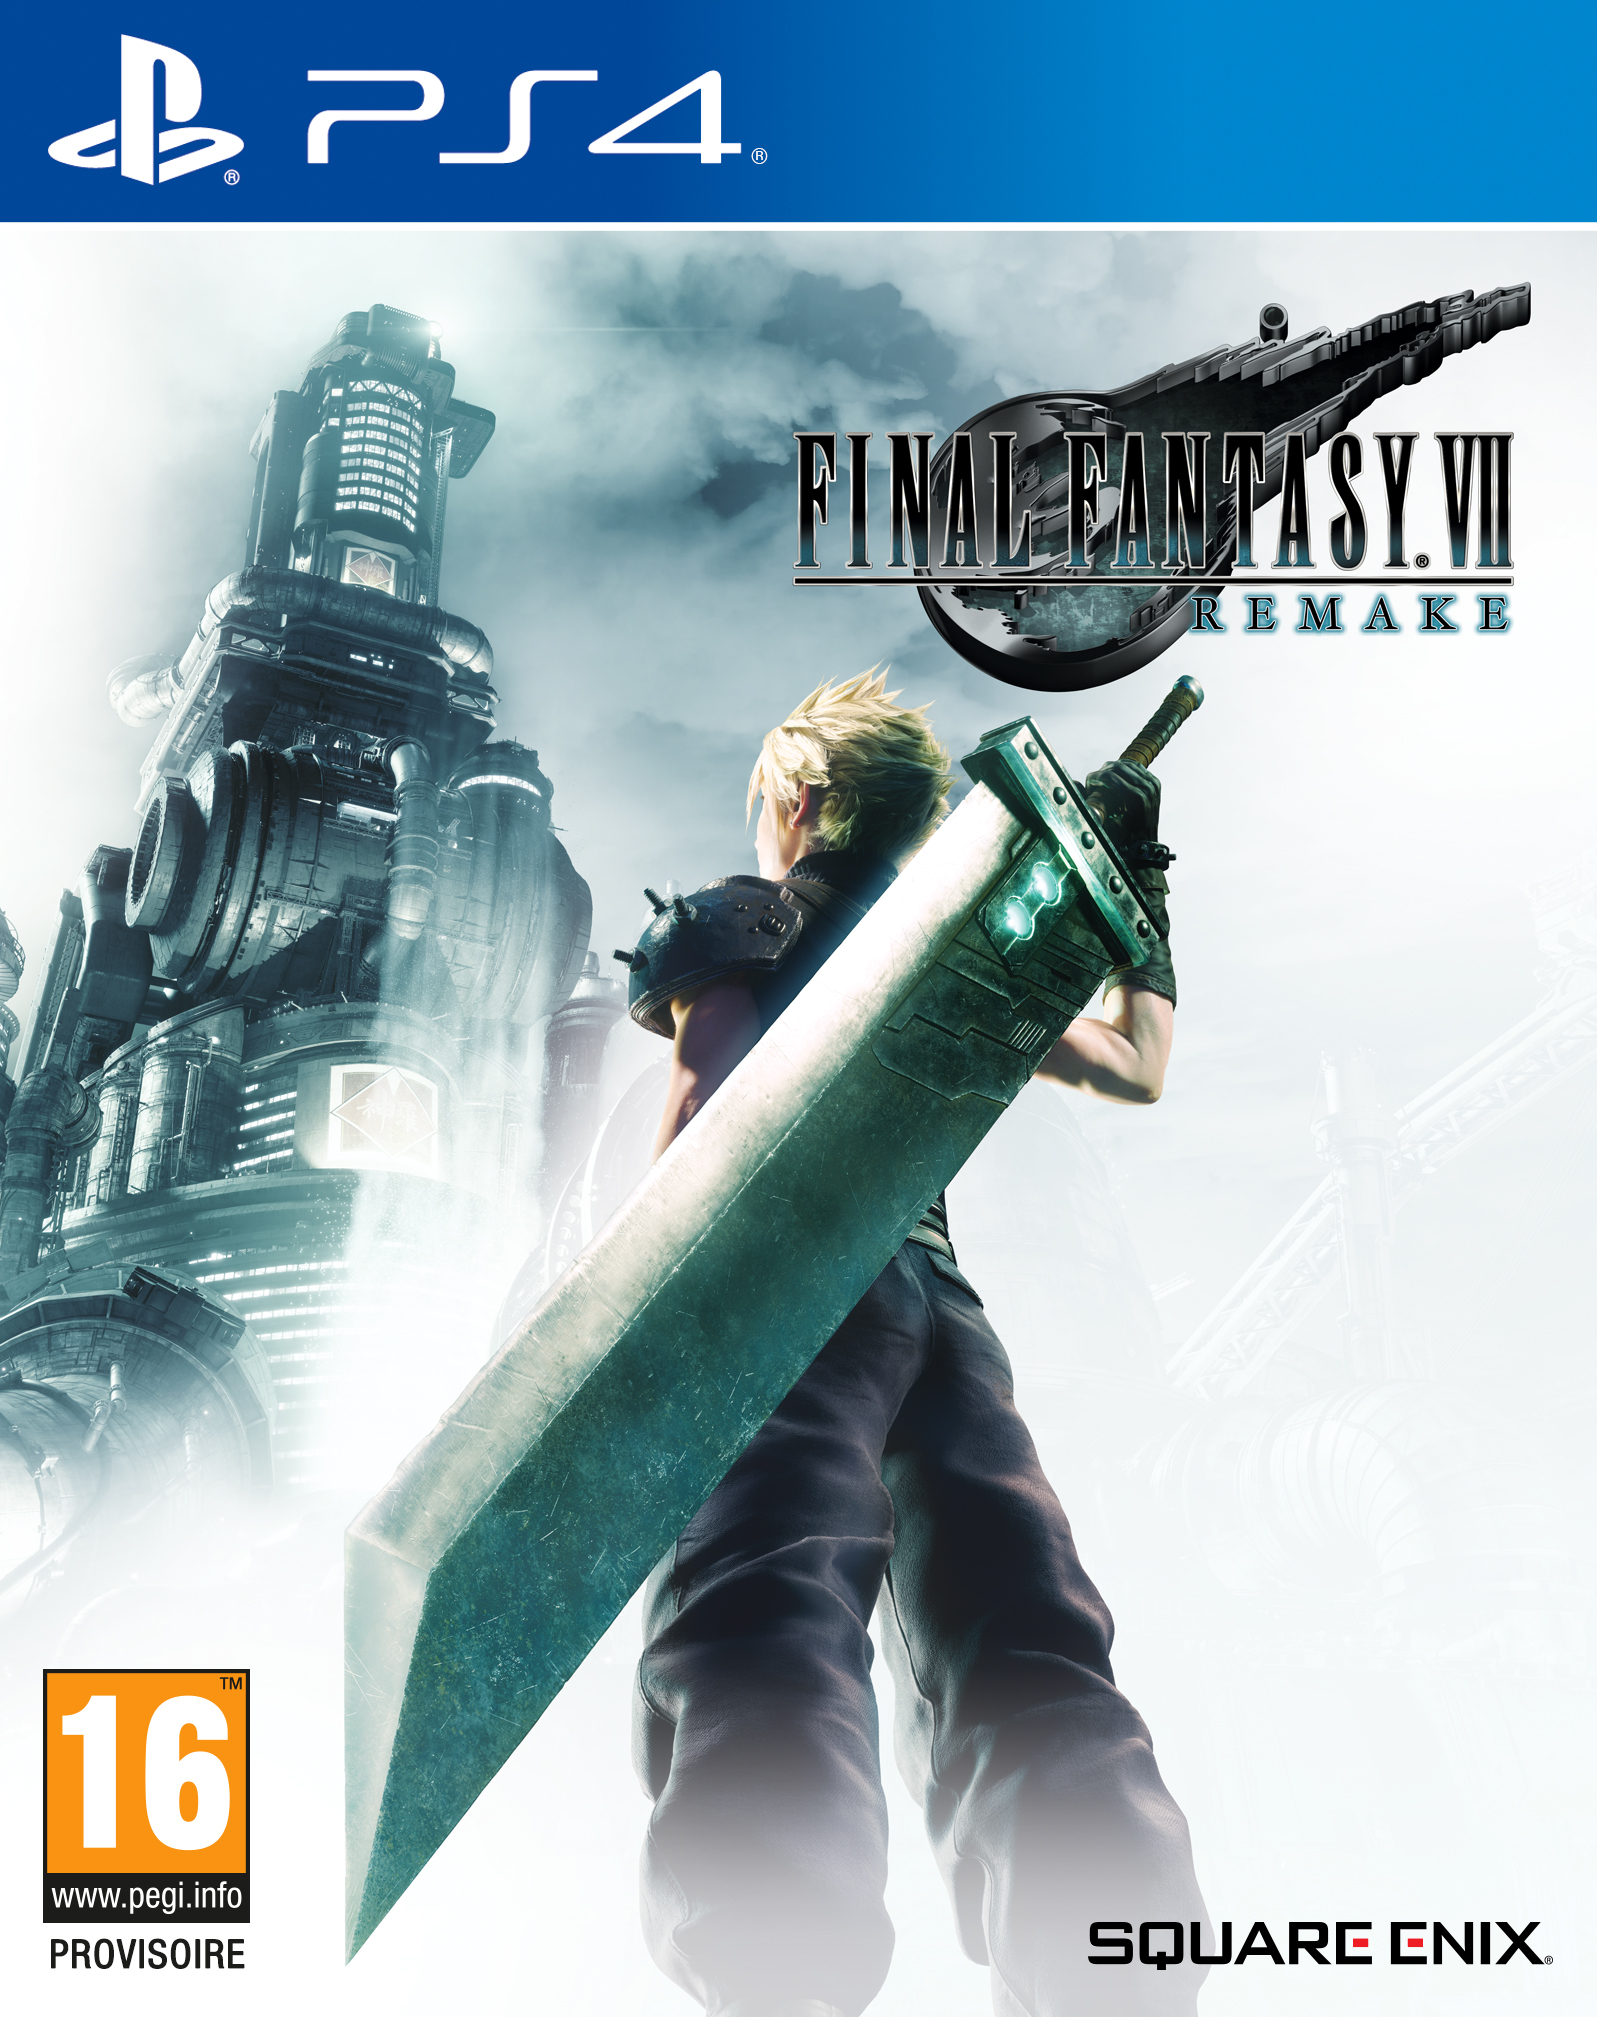 Final Fantasy VII Full Remake